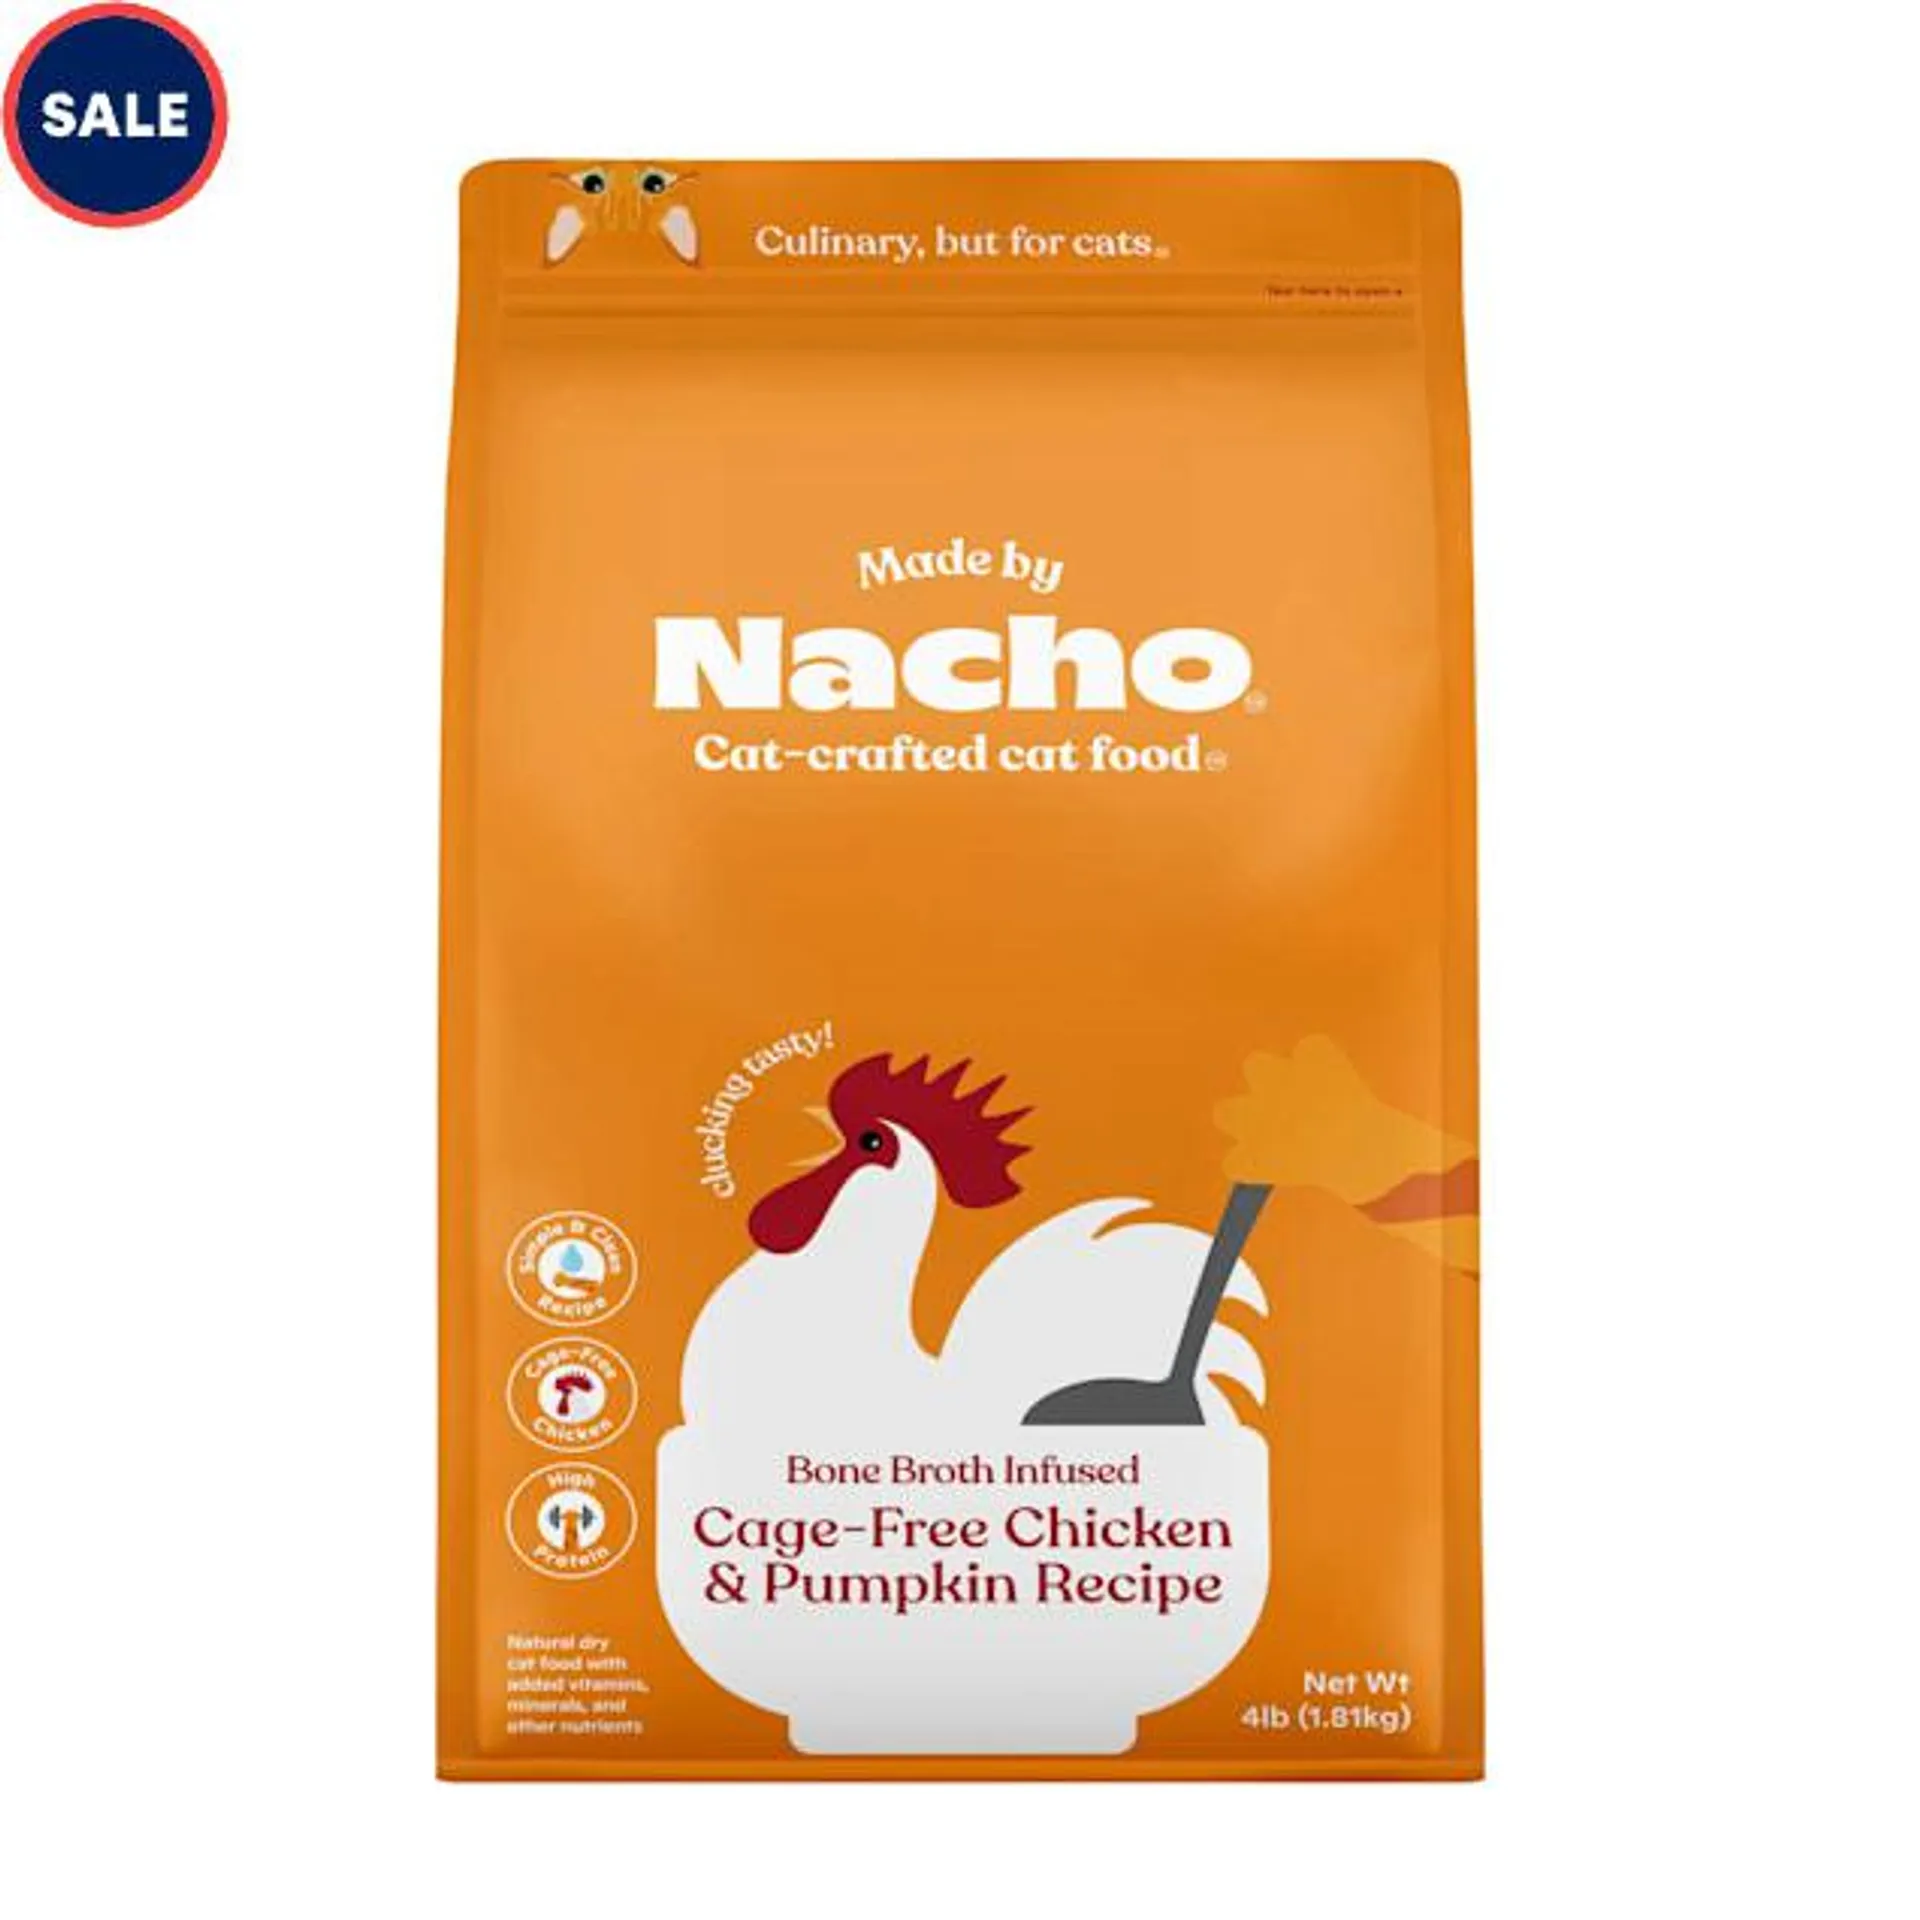 Made by Nacho Premium Grain-Friendly Chicken & Pumpkin Recipe Bone Broth Infused Dry Cat Food, 4 lbs.